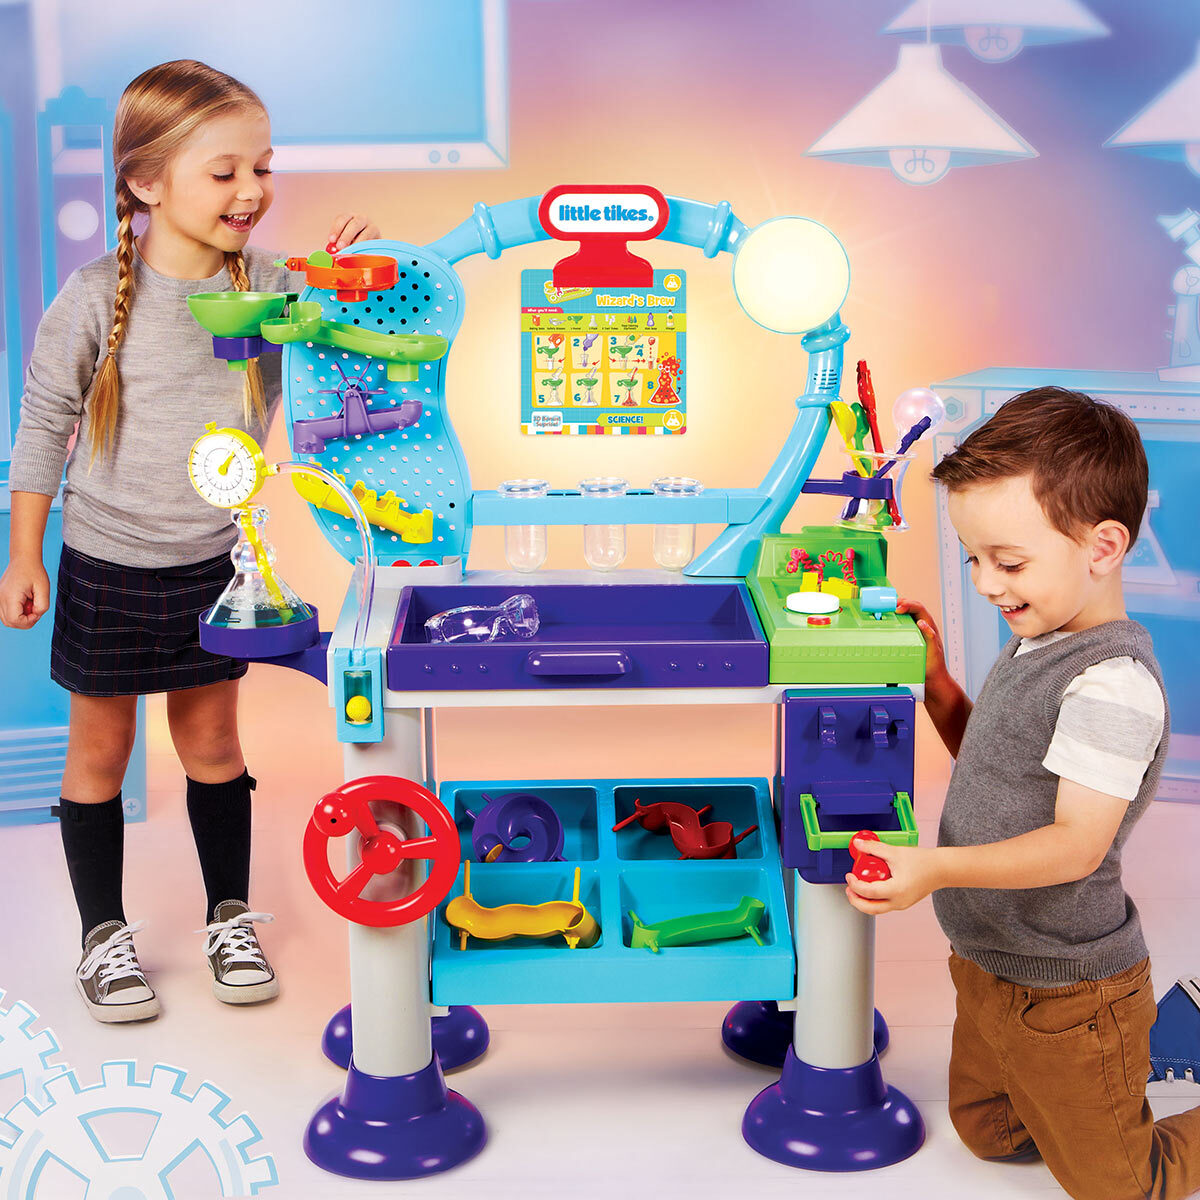 Buy Little Tikes STEM Junior Wonder Lab Full Lifestyle Image at Costco.co.uk